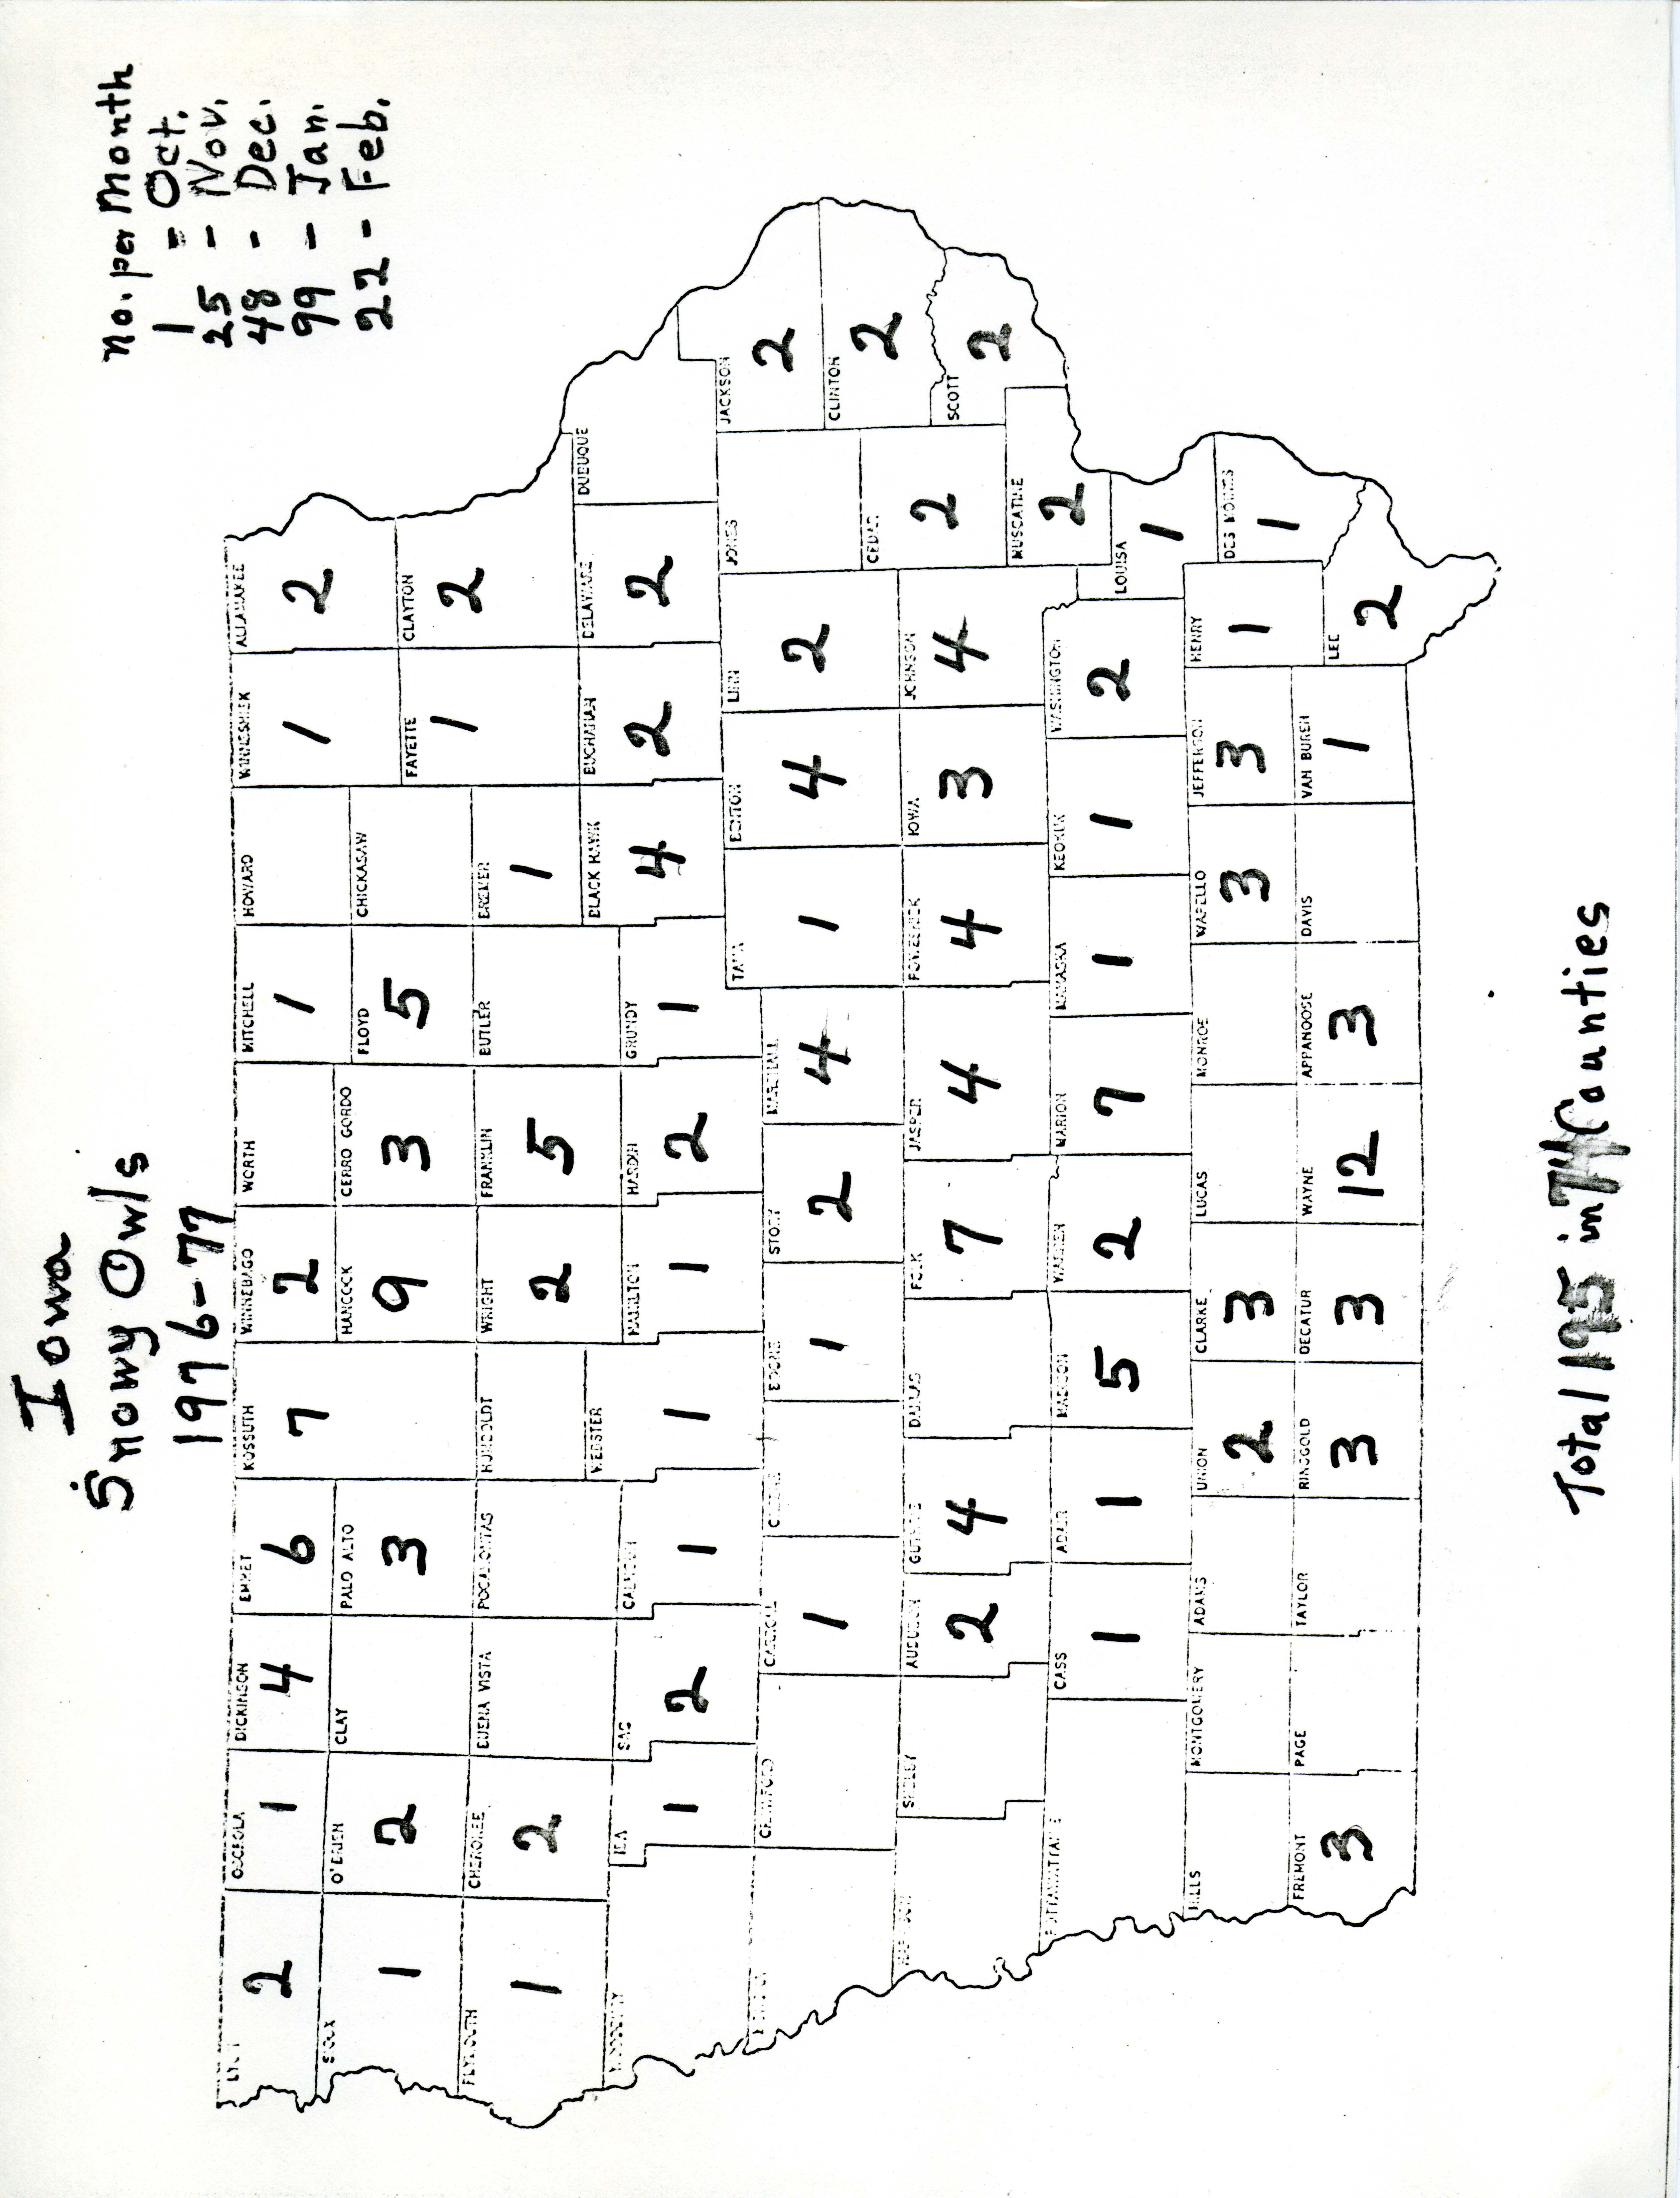 Iowa map with Snowy Owl sightings, 1976-1977